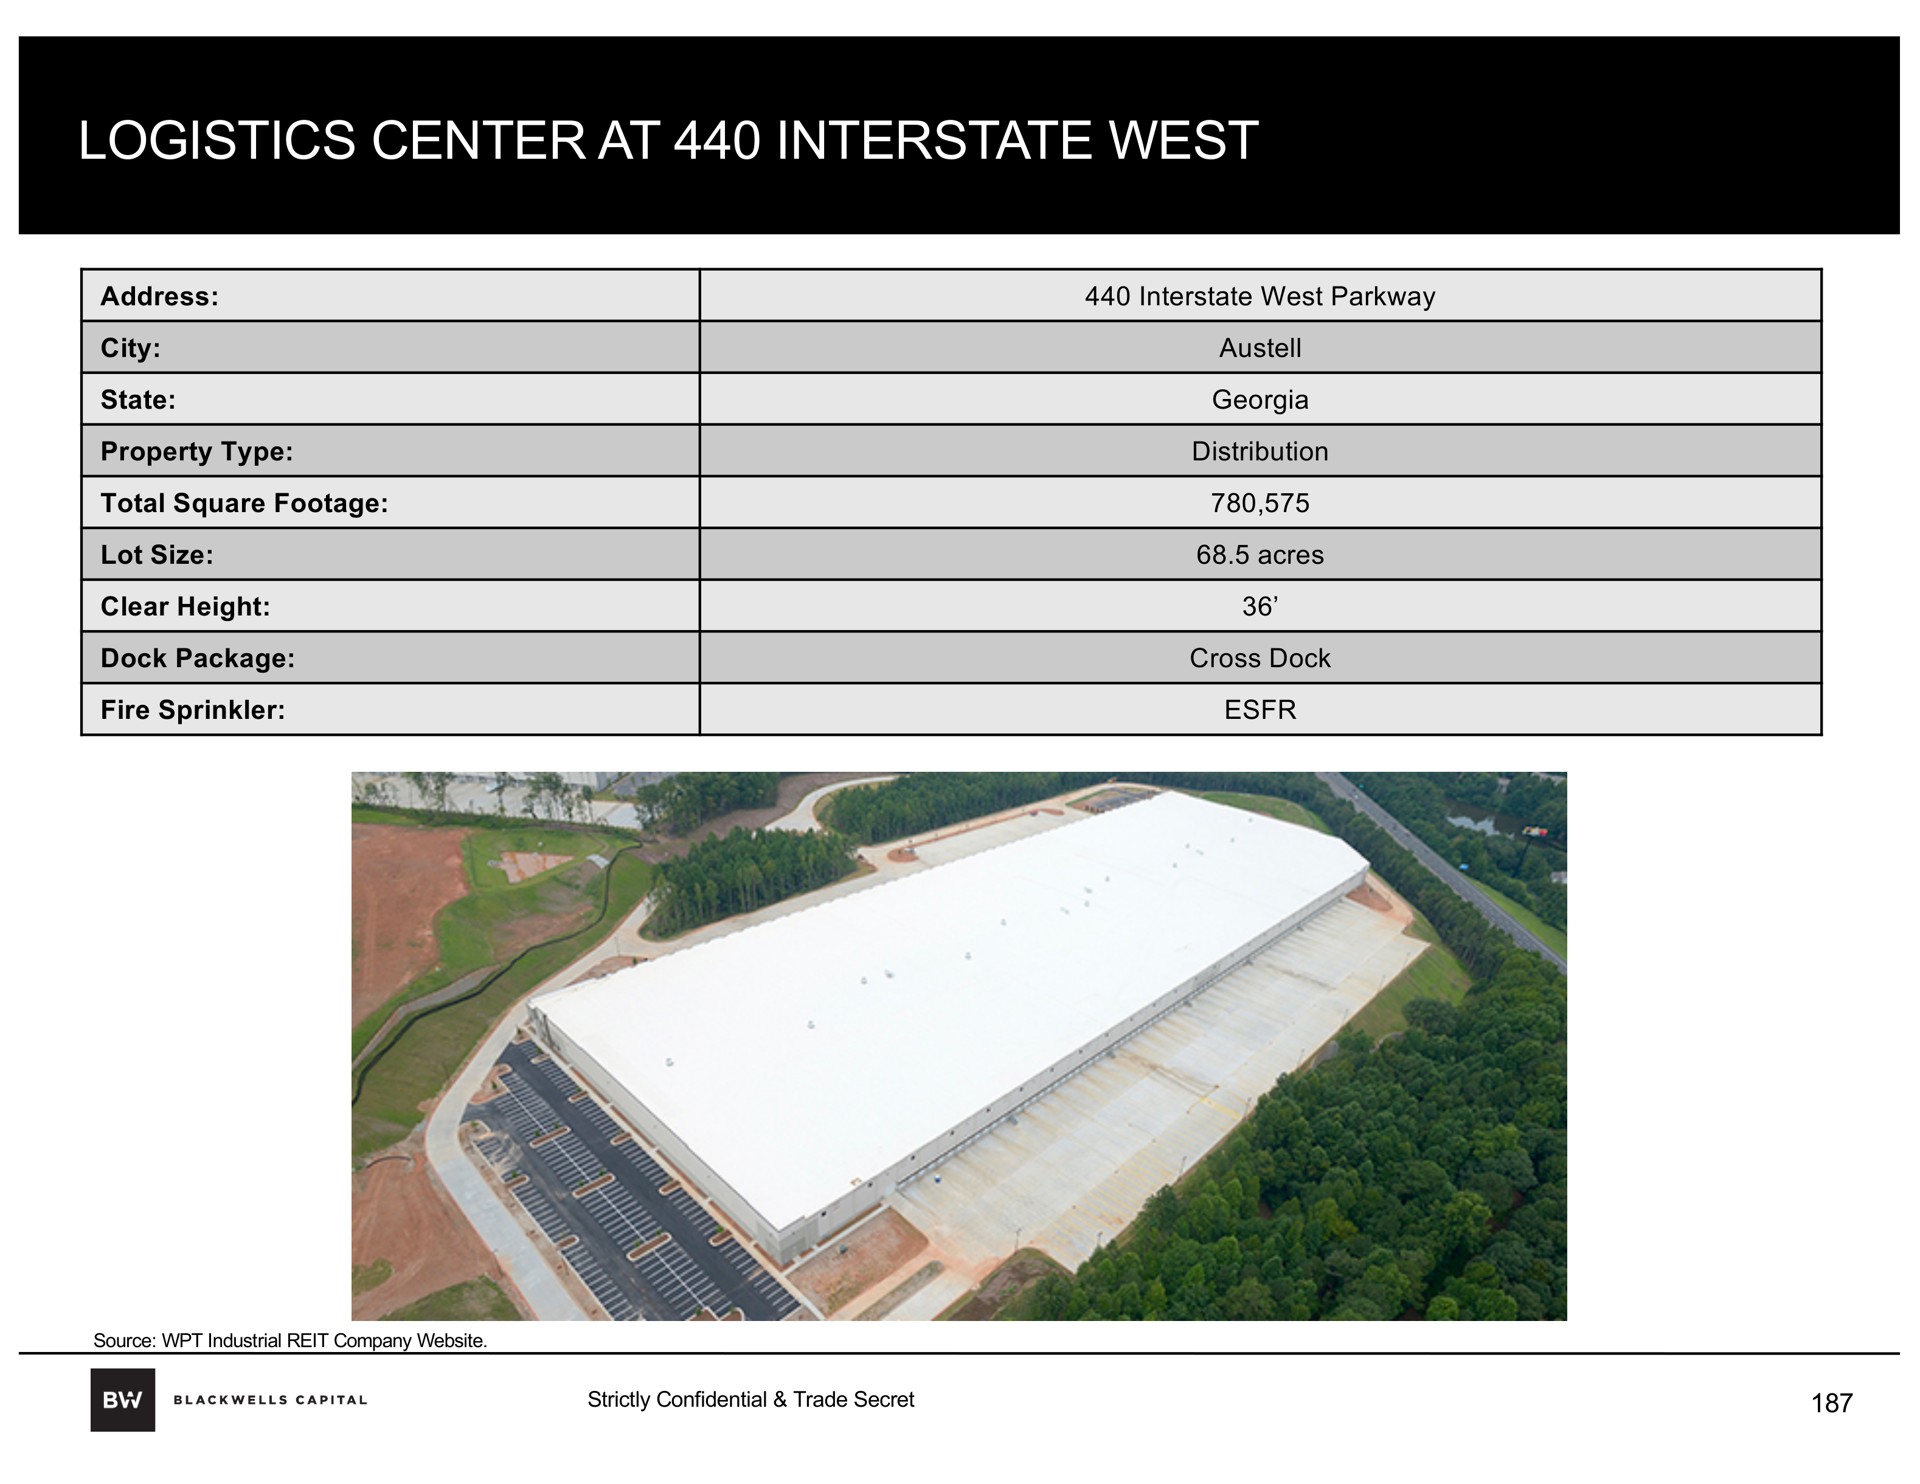 logistics center at interstate west a a | Blackwells Capital